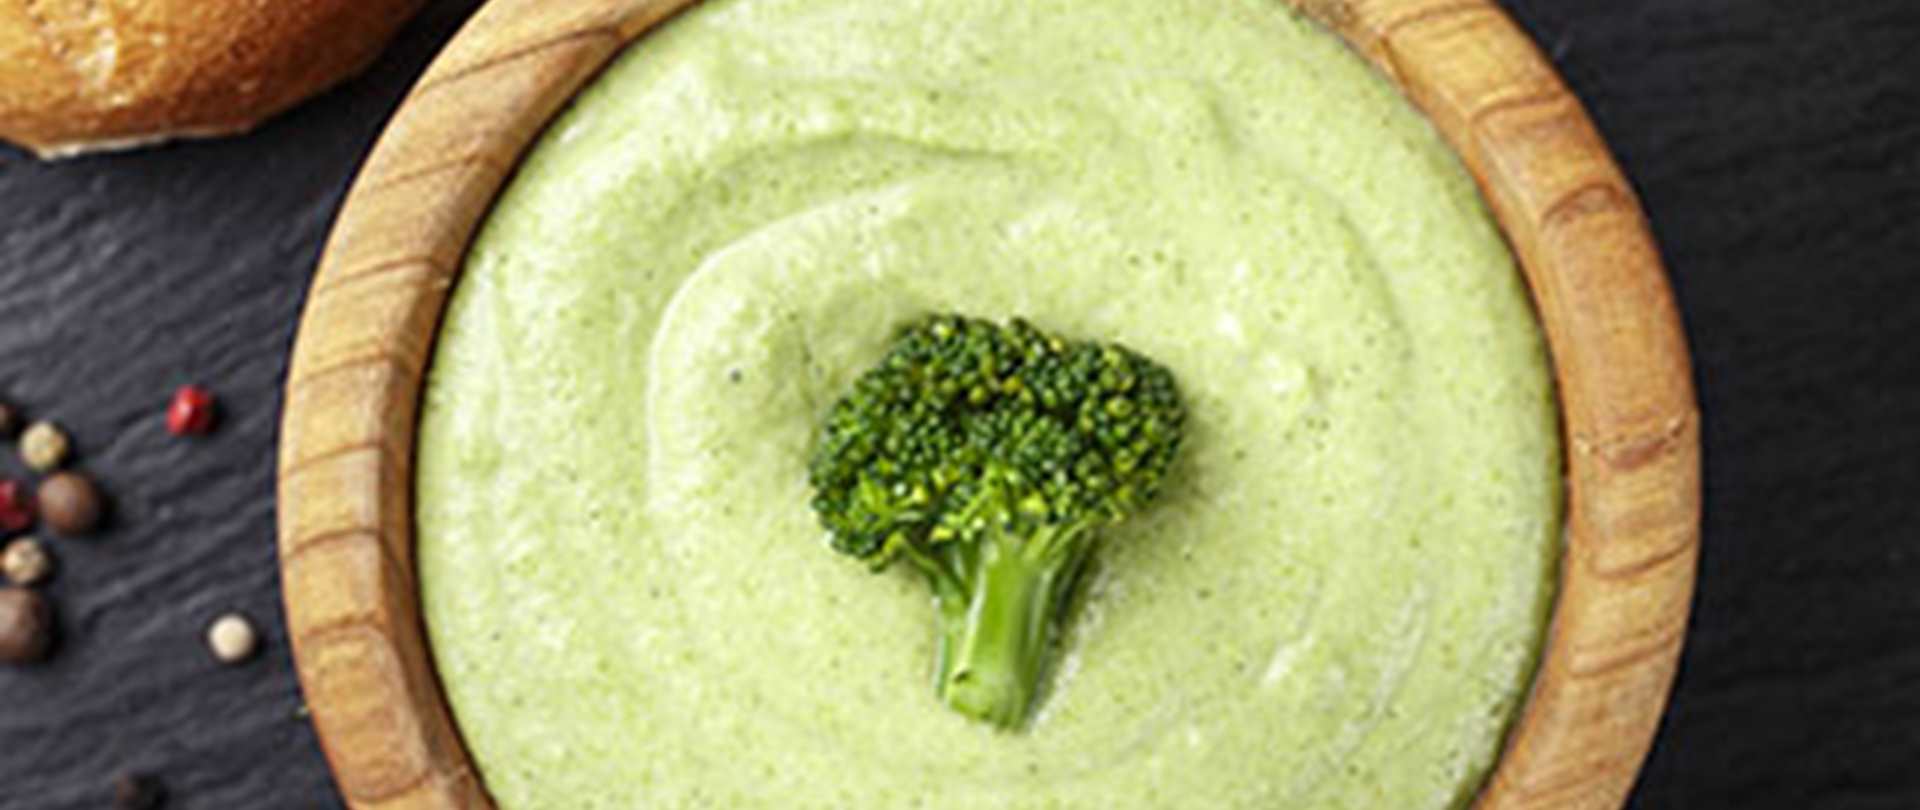 A bowl of broccoli soup